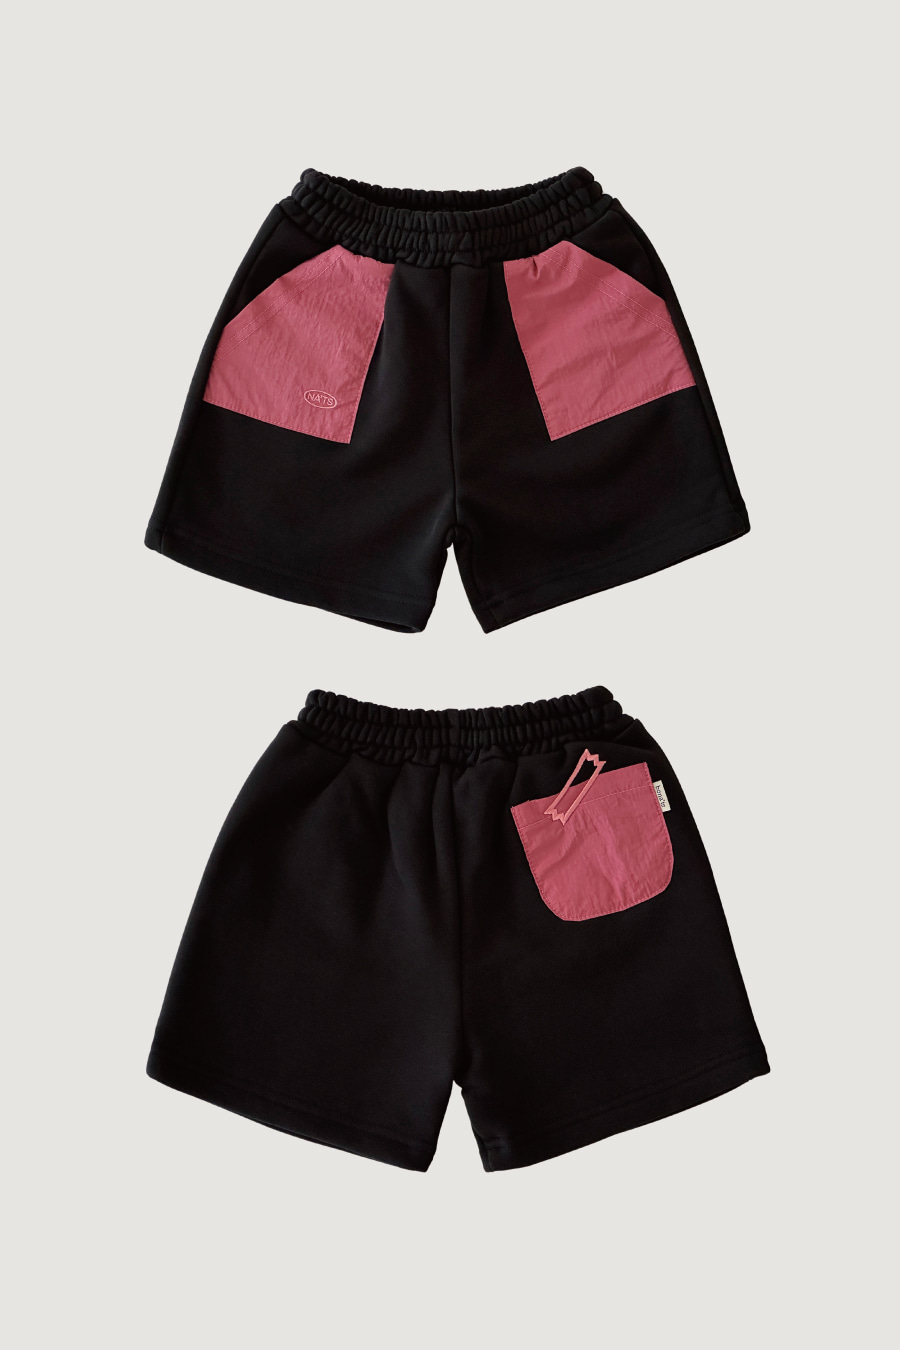 Nats nylon Coloring sweat shorts (Black)